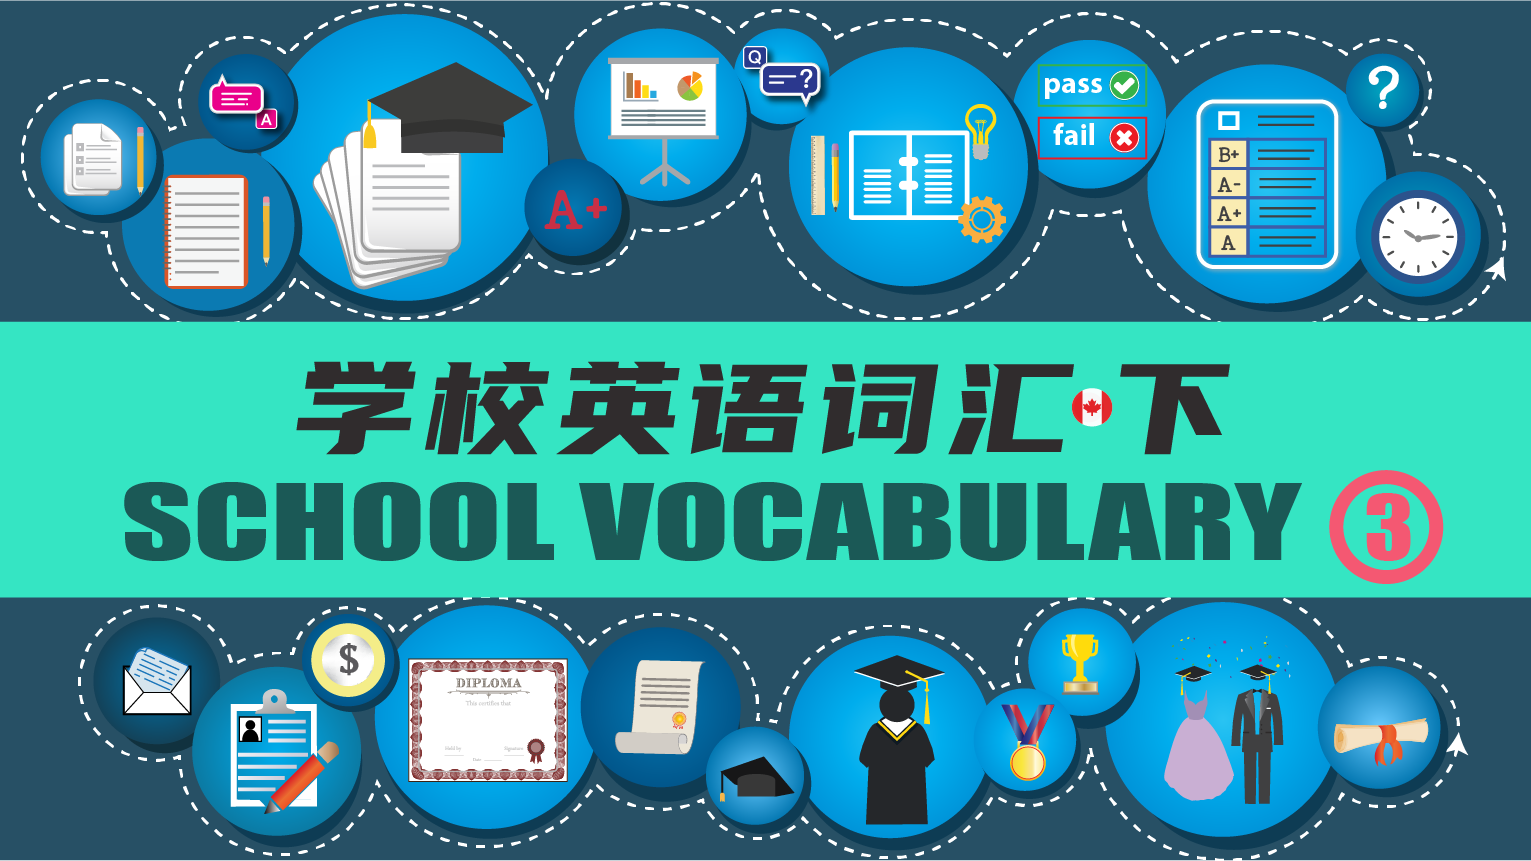 School Vocabulary - Part 3